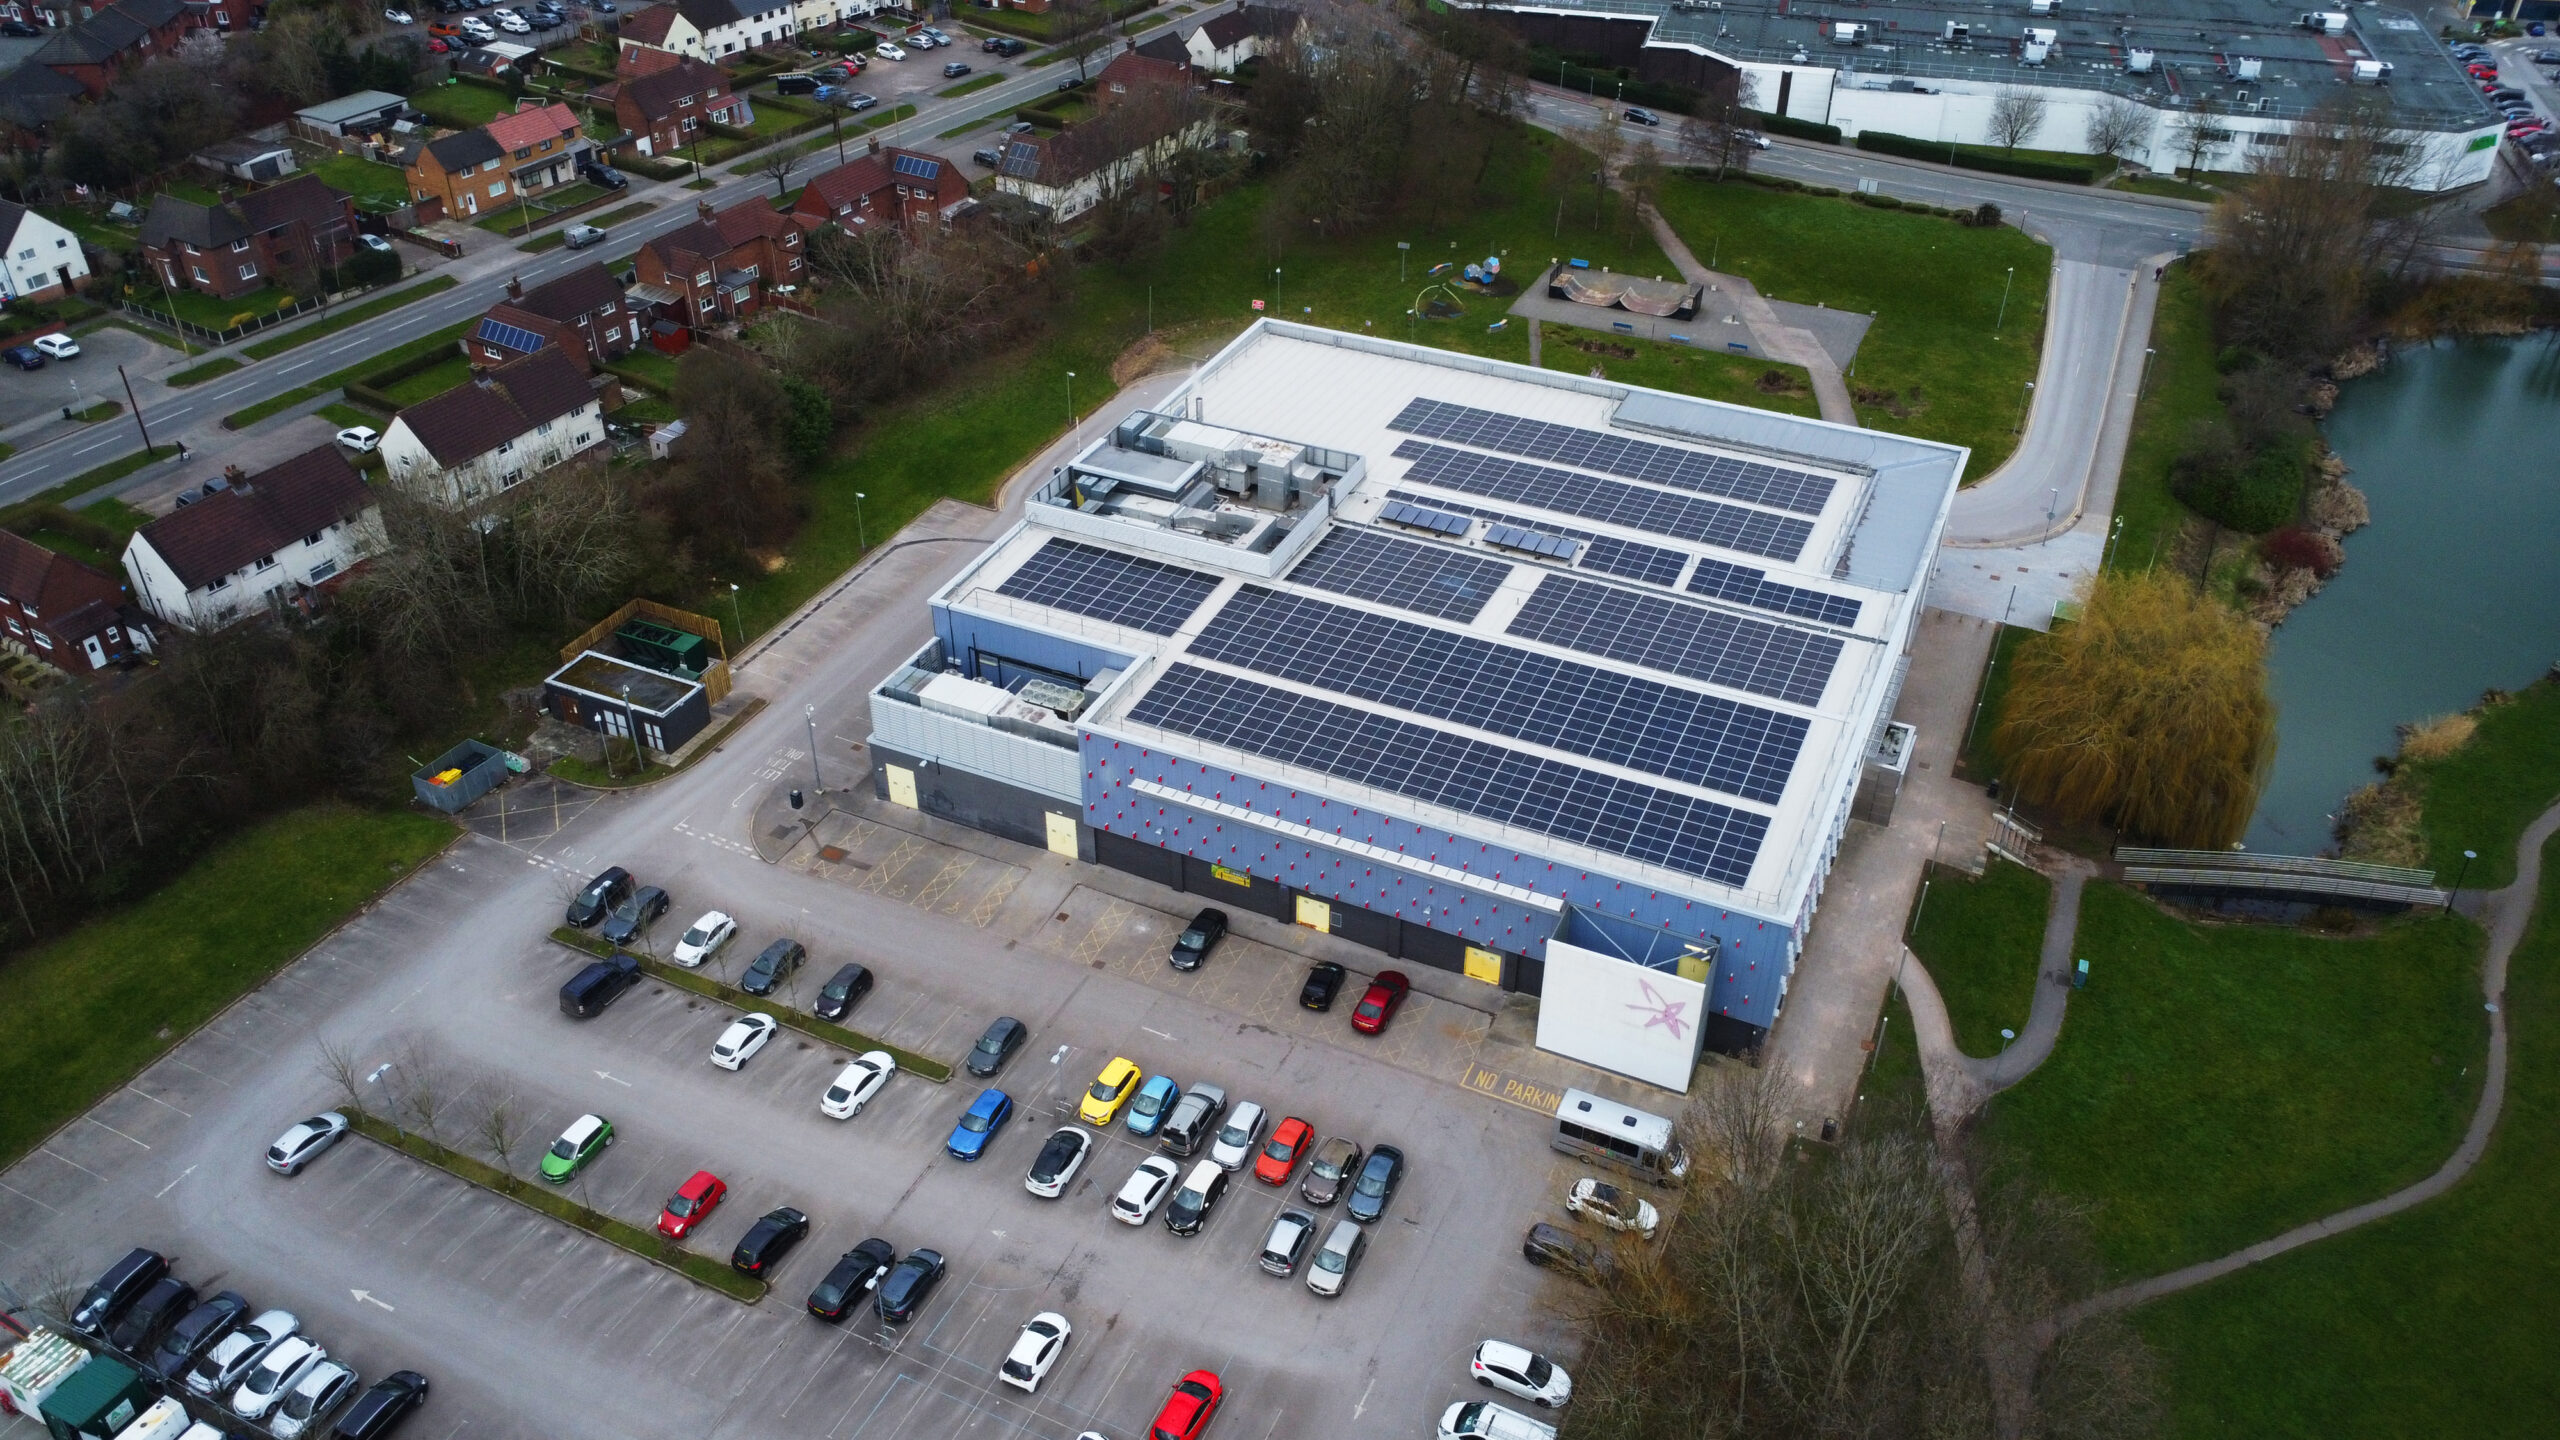 Winsford Leisure Centre Solar Panel System Photo 8